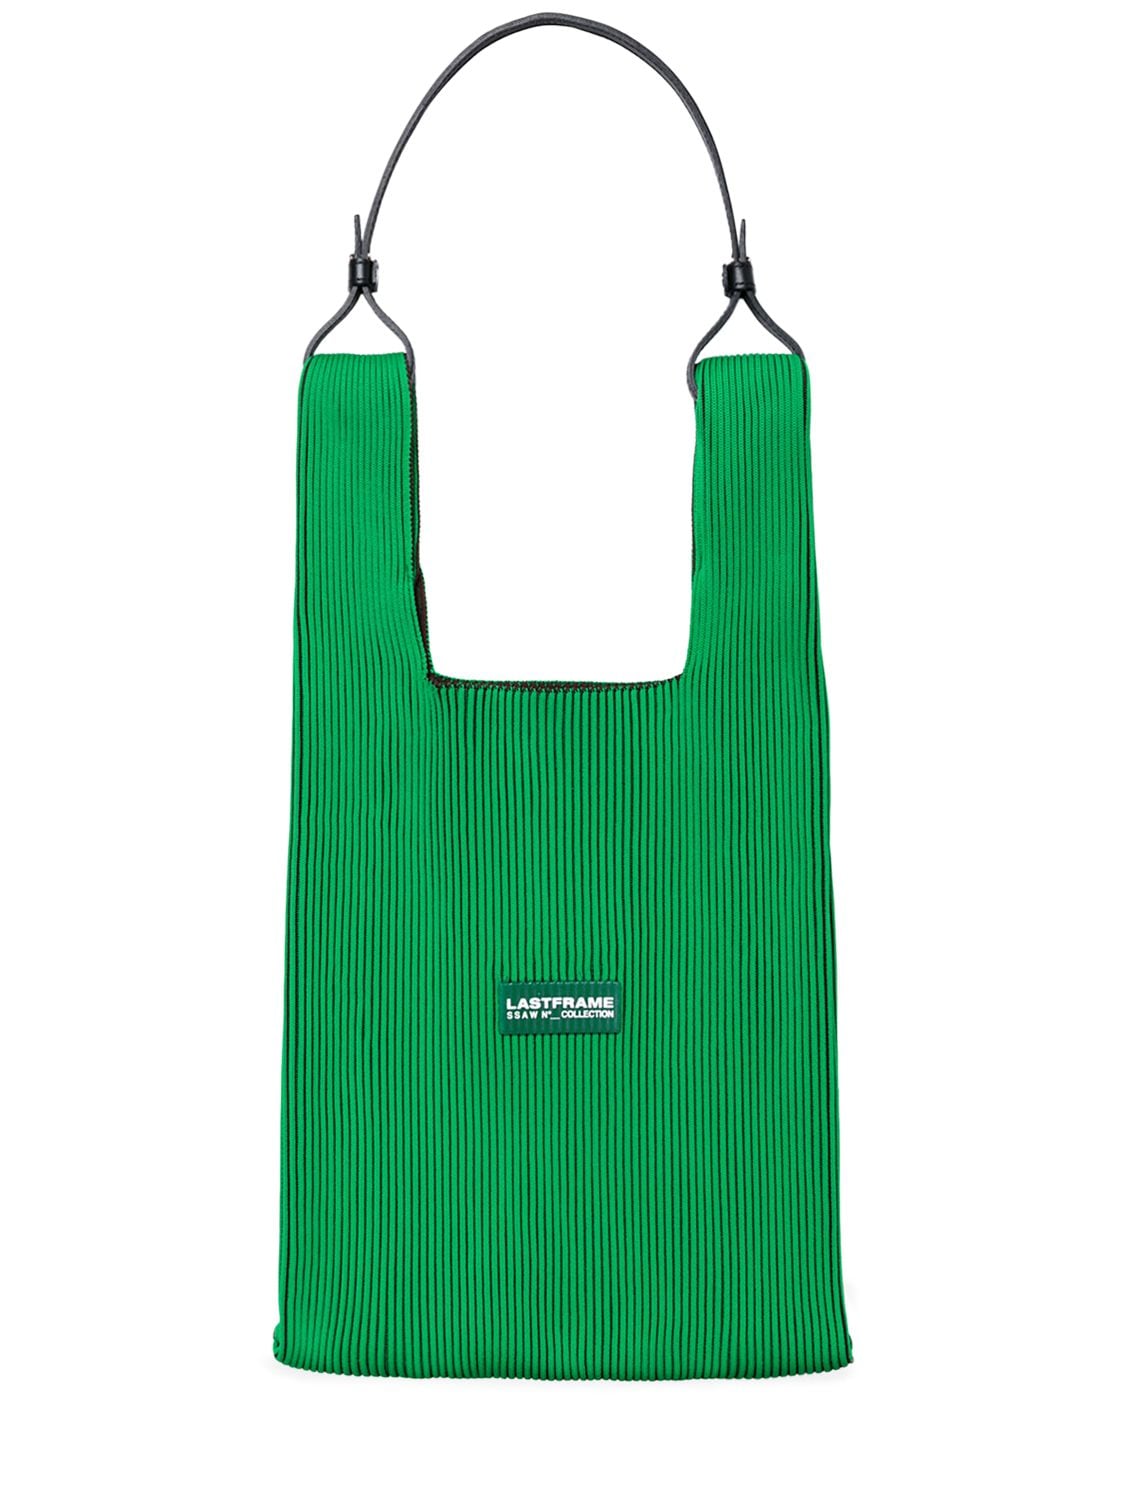 Lastframe Medium Two-tone Market Shoulder Bag In Green | ModeSens